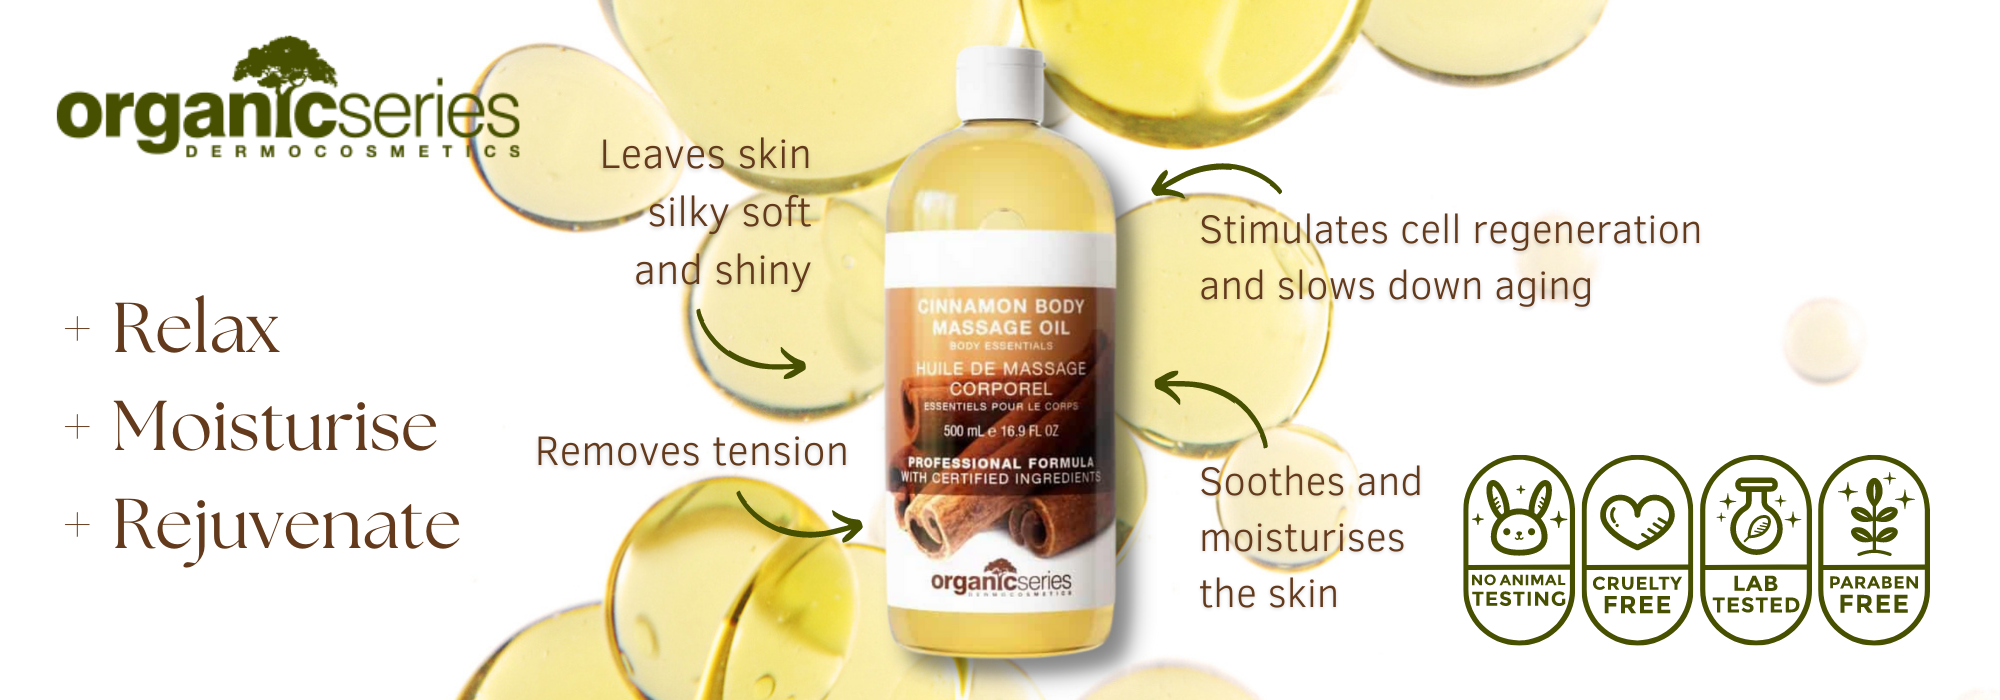 cinnamon body massage body oil by organic series